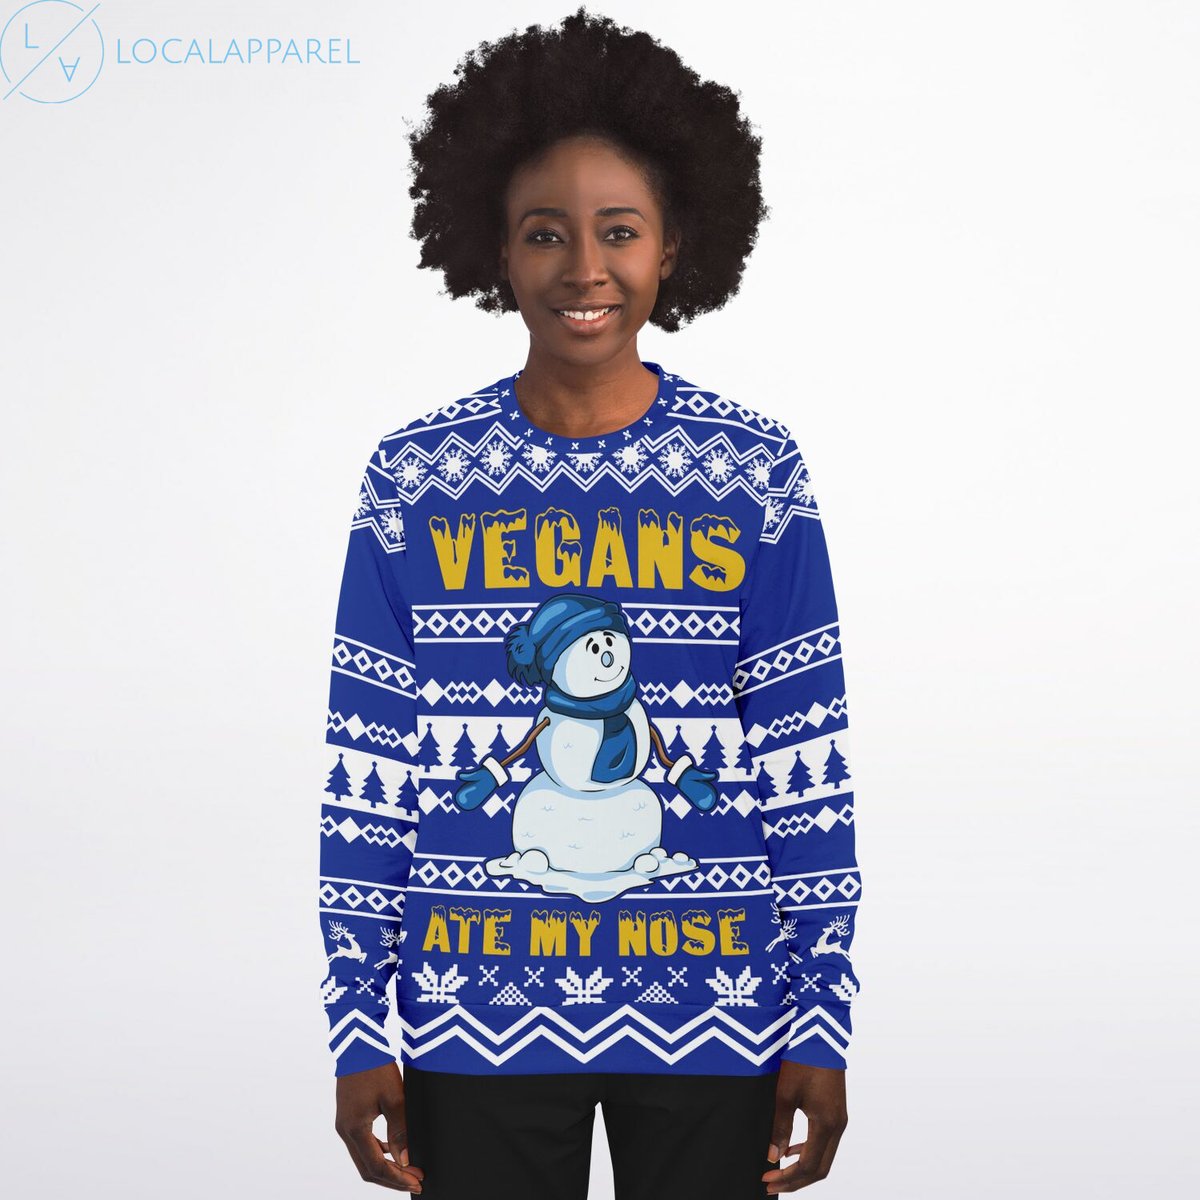 Vegan's gotta eat too.
.
.
.
.
.
.
#uglychristmassweater #christmas #uglysweater #uglychristmassweaterparty #christmassweater #uglysweaterparty #merrychristmas #christmastree #christmastime #xmas #happyholidays #uglysweaterday #uglychristmas #uglychristmassweaters